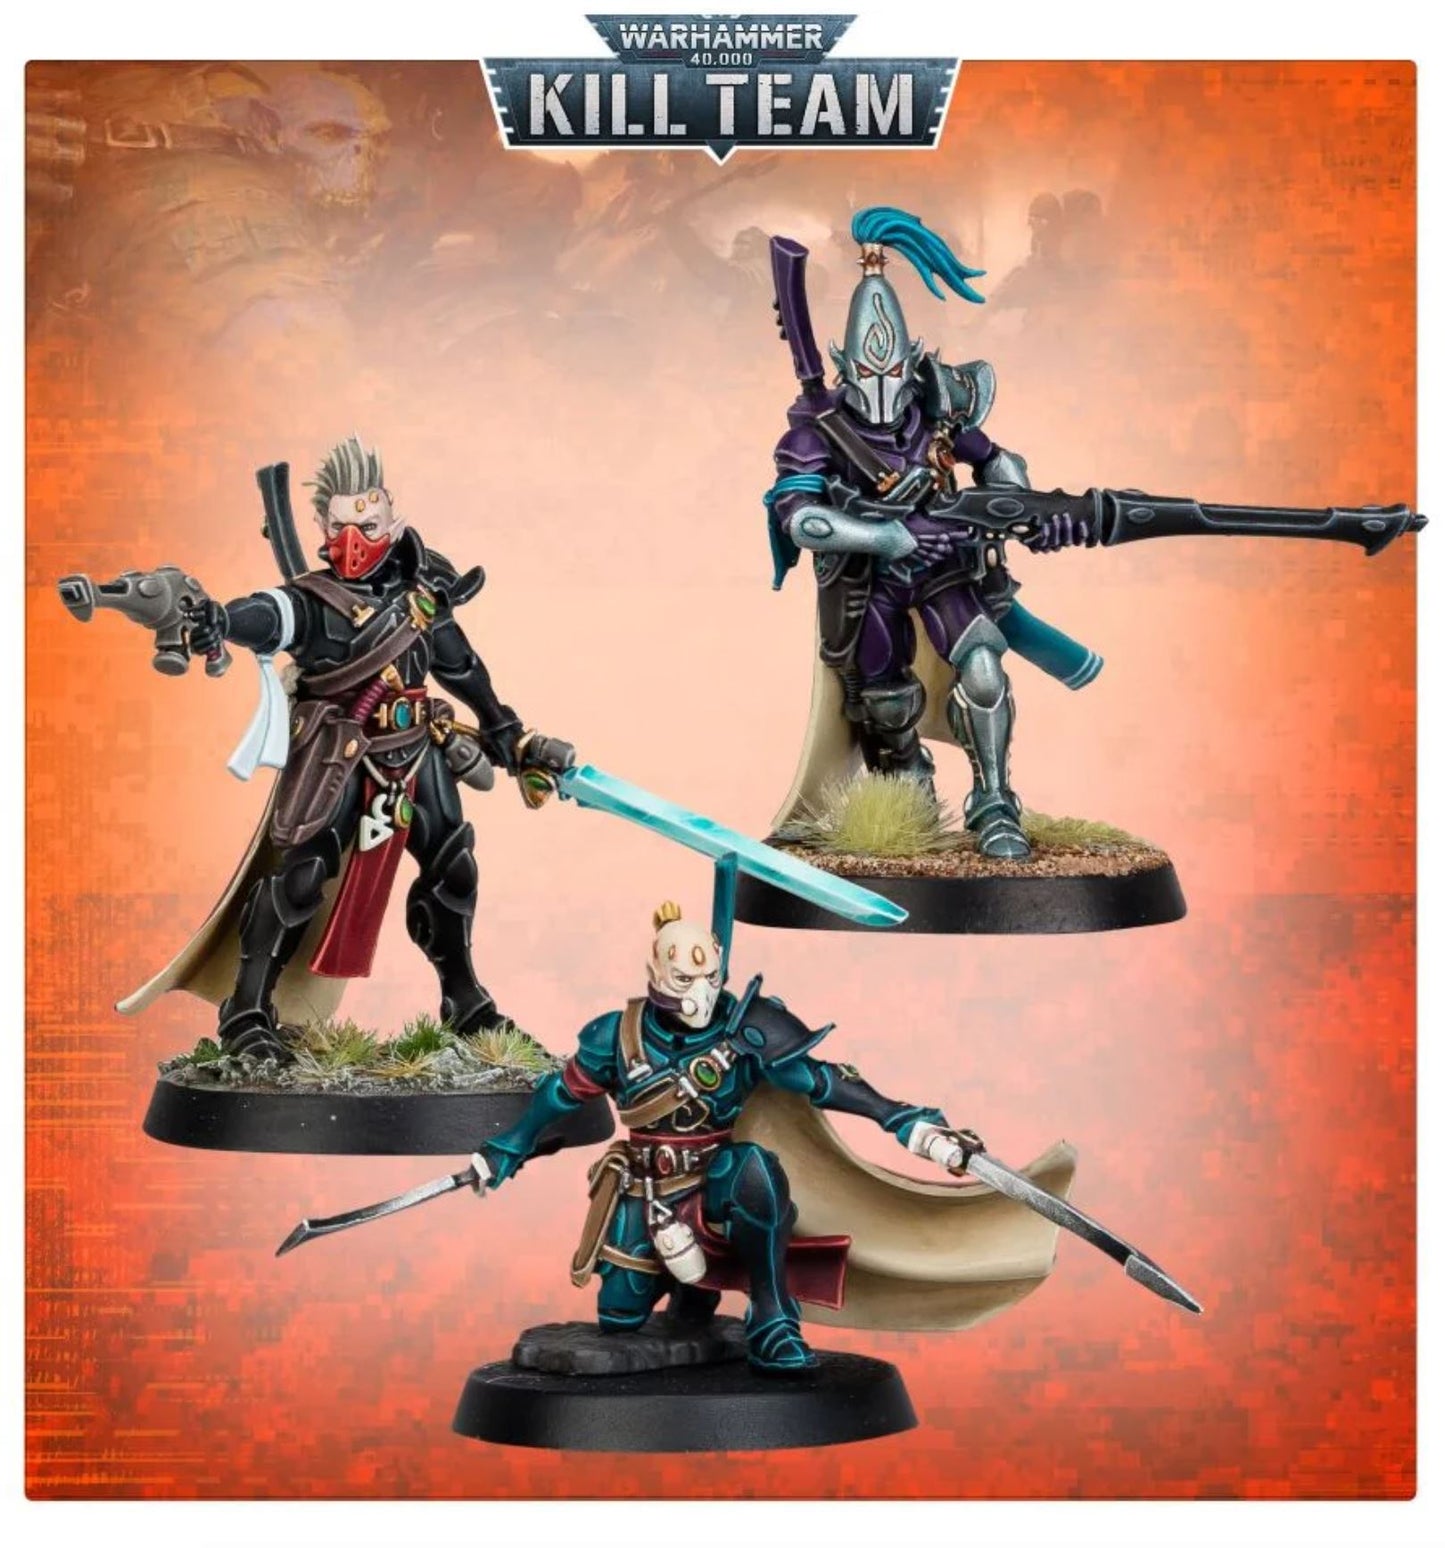 Kill Team - Aeldari, Corsair Voidscarred